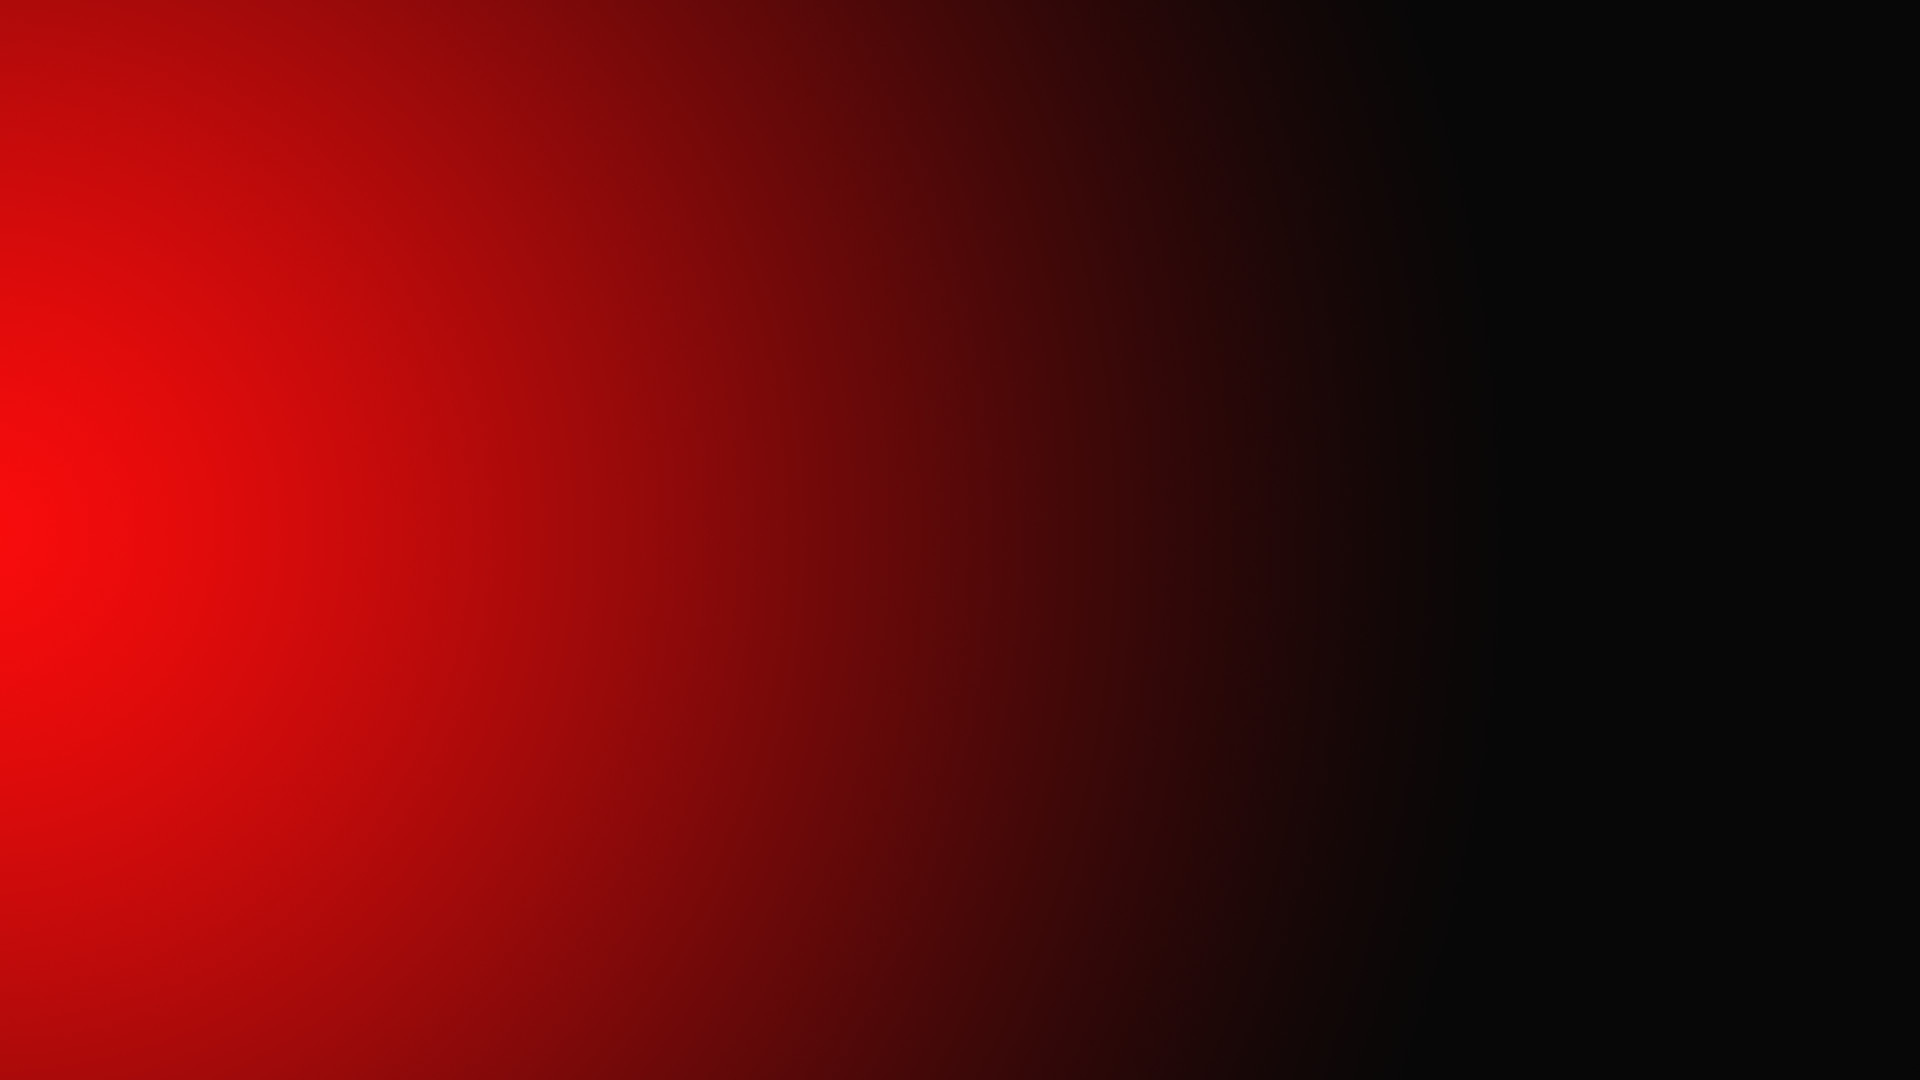 1920x1080 Red And Black Wallpaper 12 Desktop Background